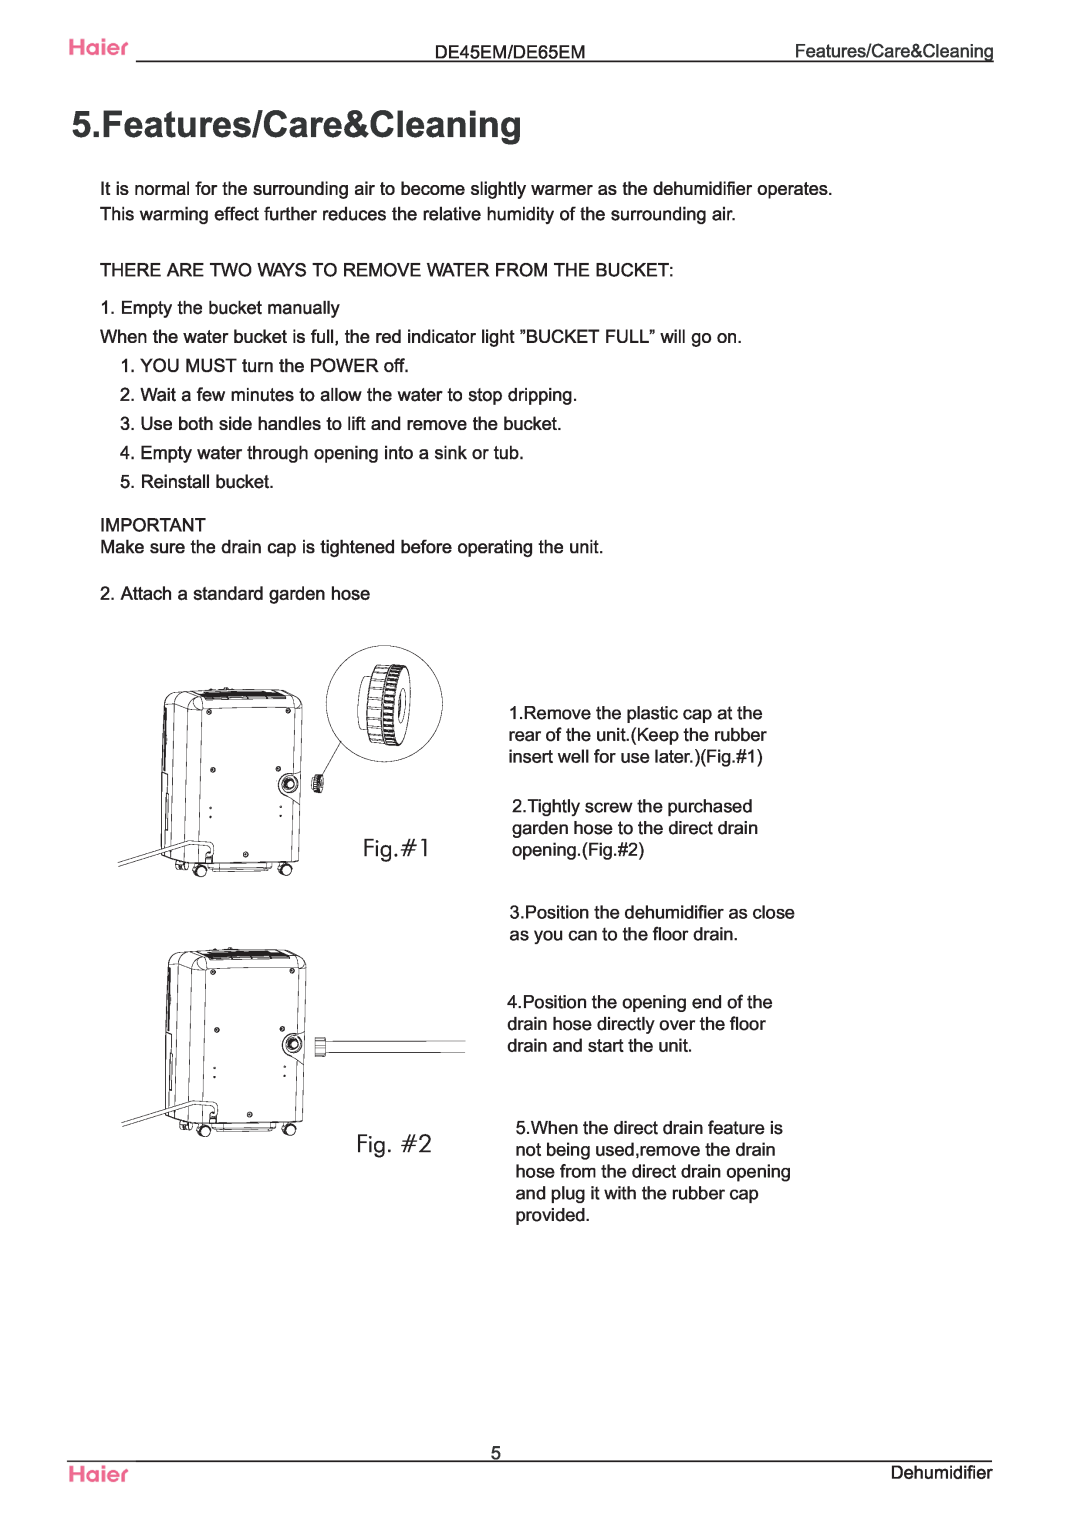 Haier DE65EM, DE45EM manual Position the dehumidifier as close as you can to the floor drain 